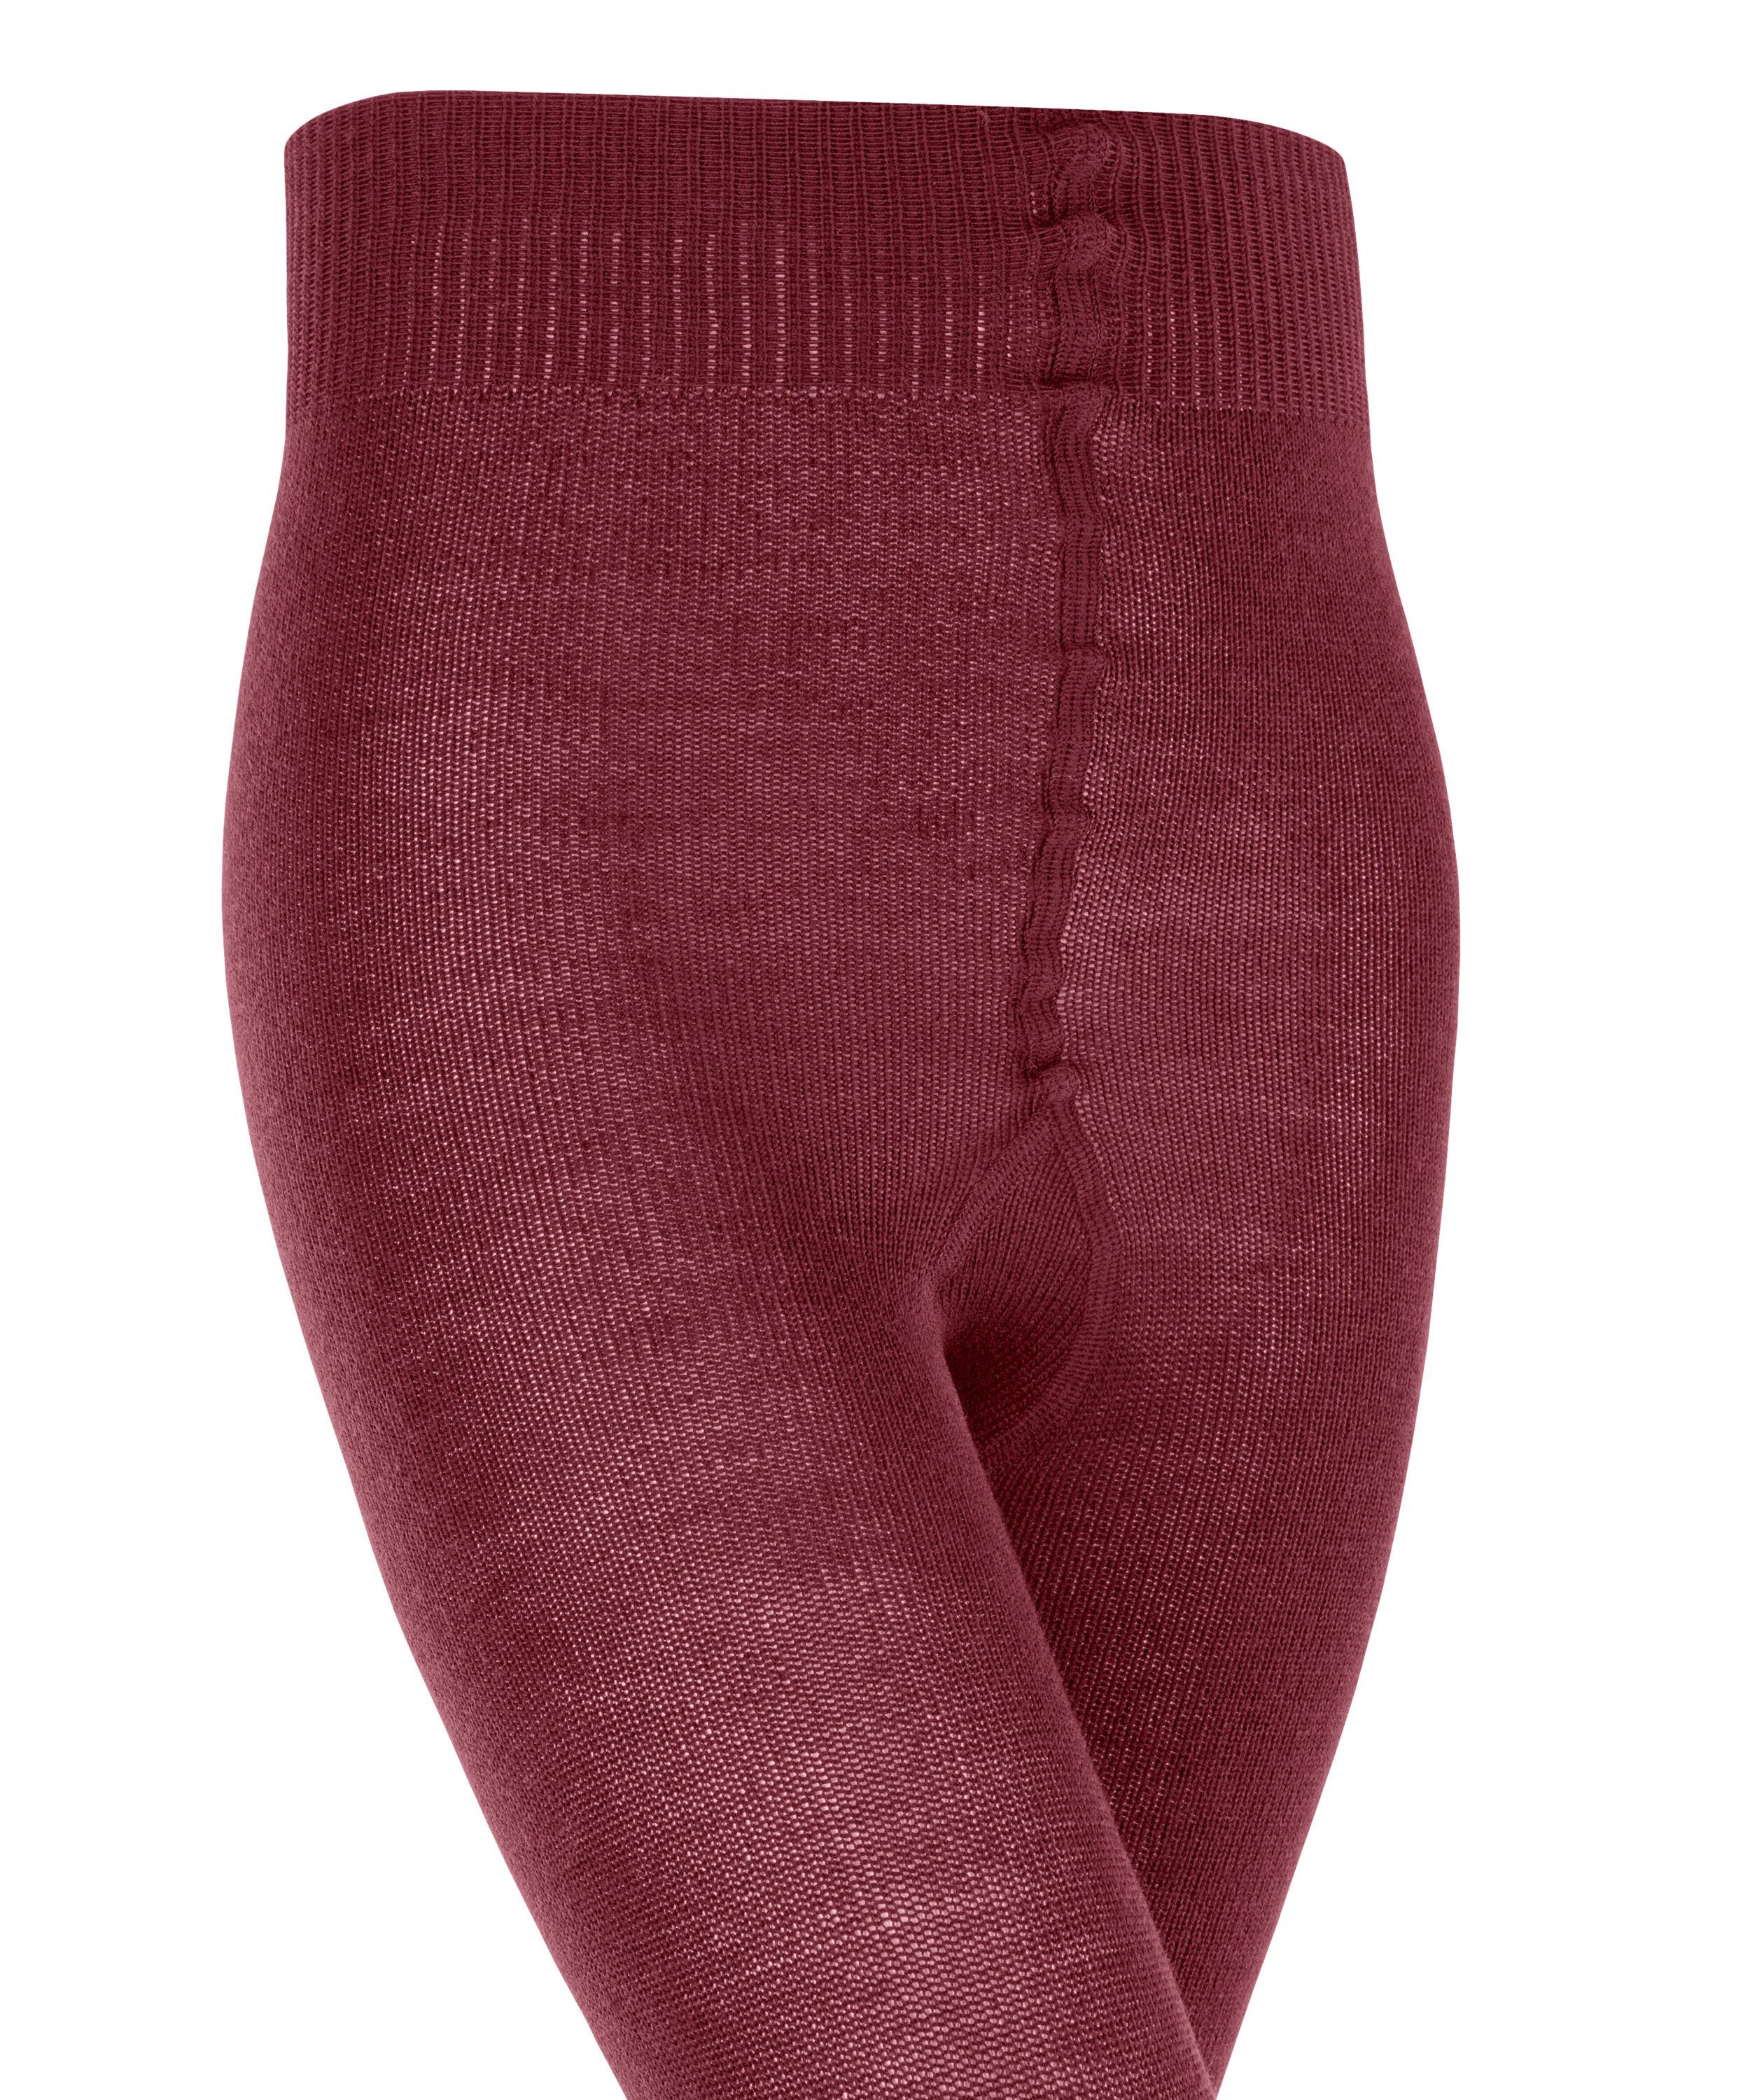 St) verstärkten Wool mit (8830) Comfort (1 Strickstrumpfhose ruby Belastungszonen FALKE